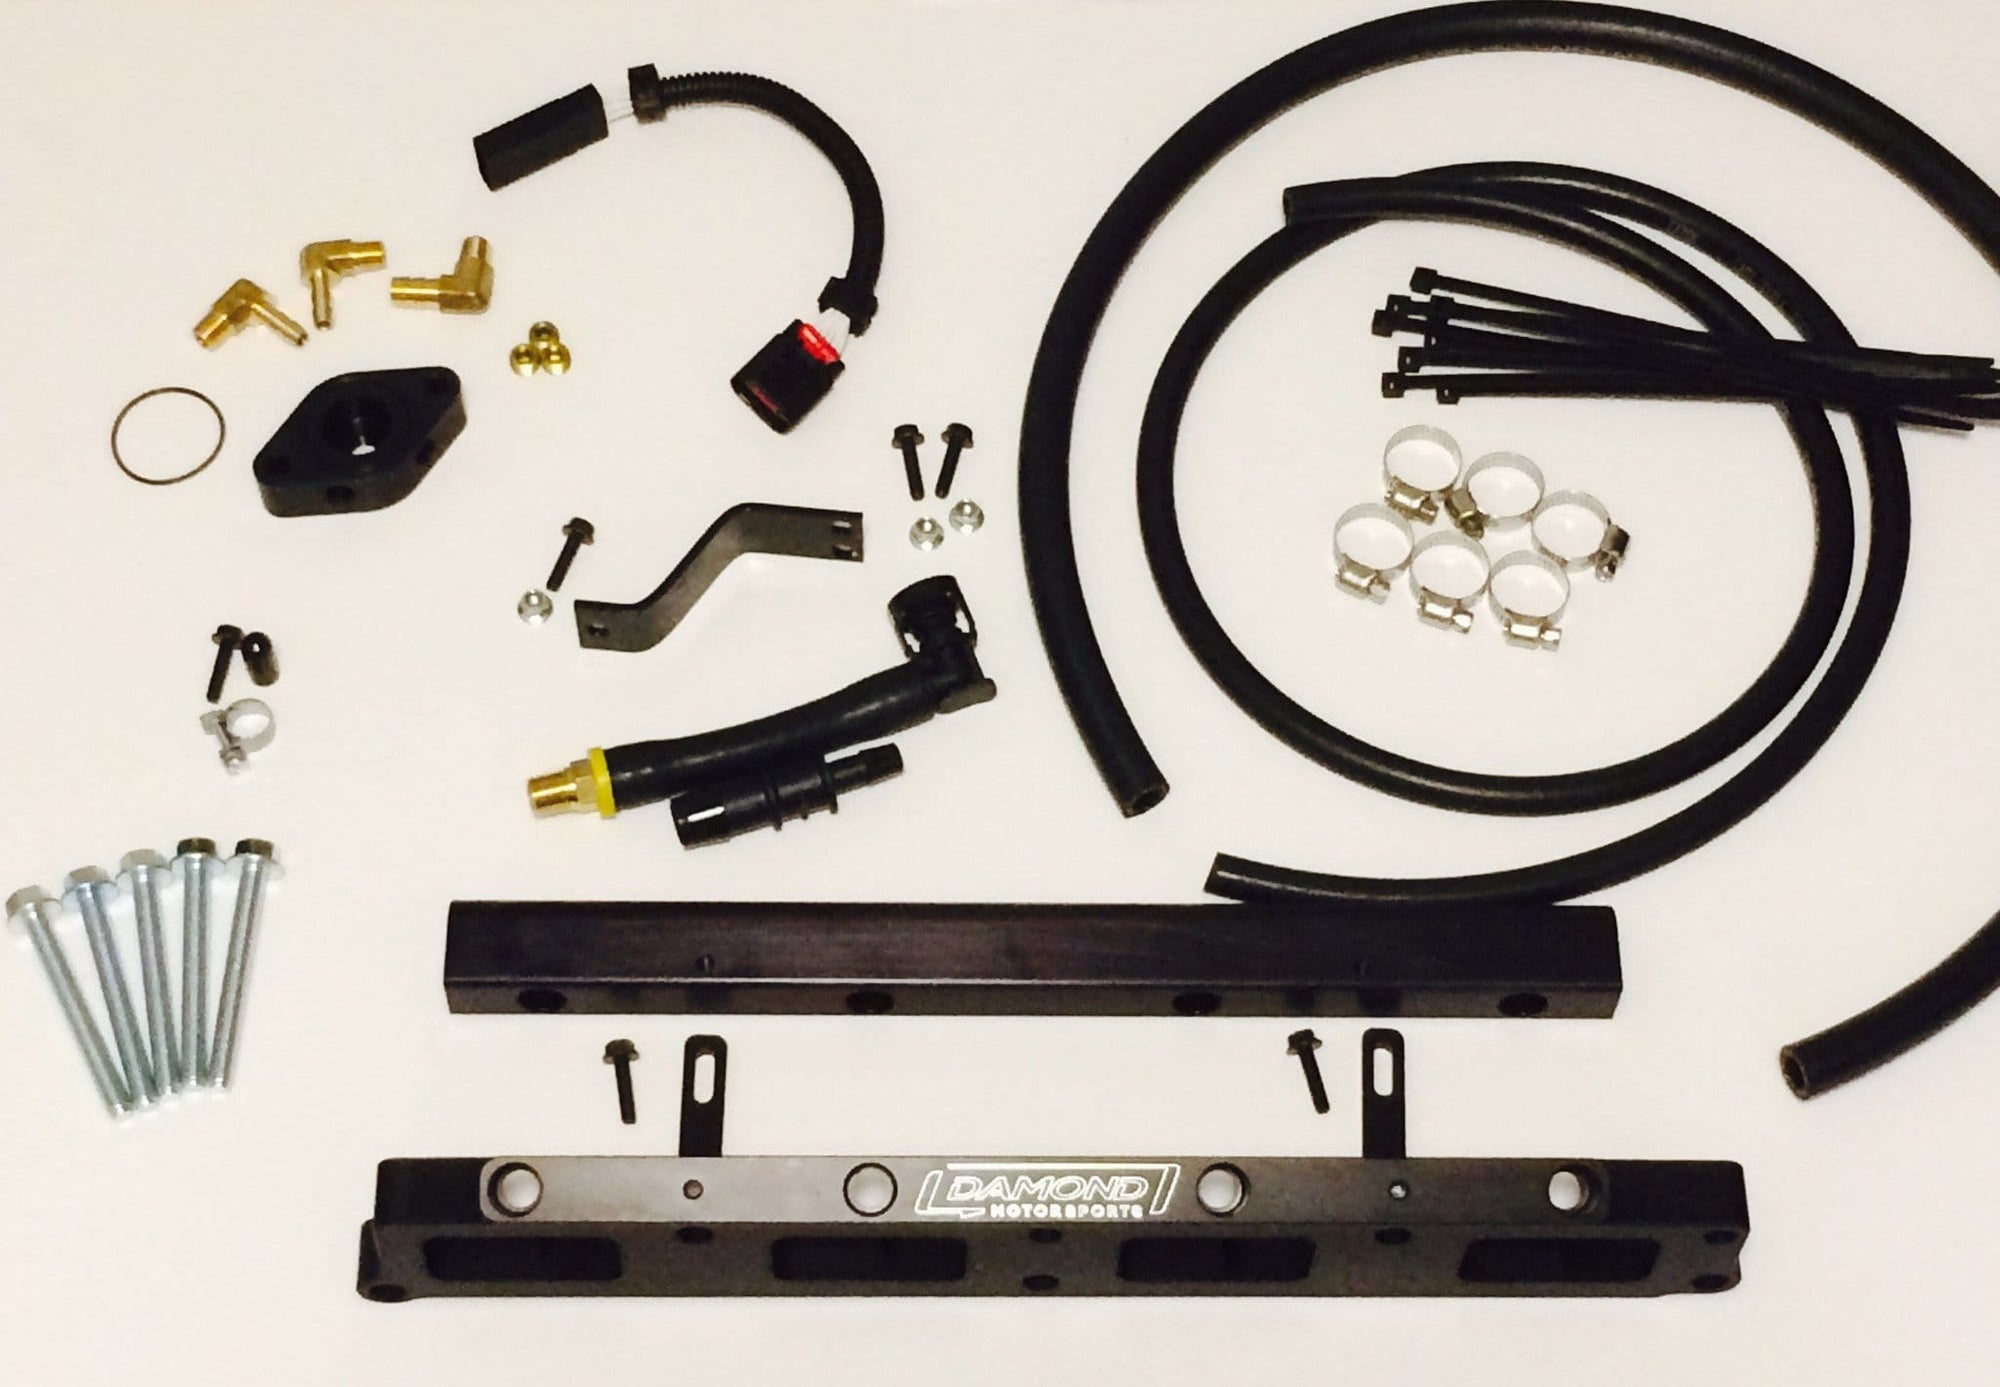 Damond Motorsports-Mazdaspeed6 ST Manifold Port Injection Adapter Kit- at Damond Motorsports